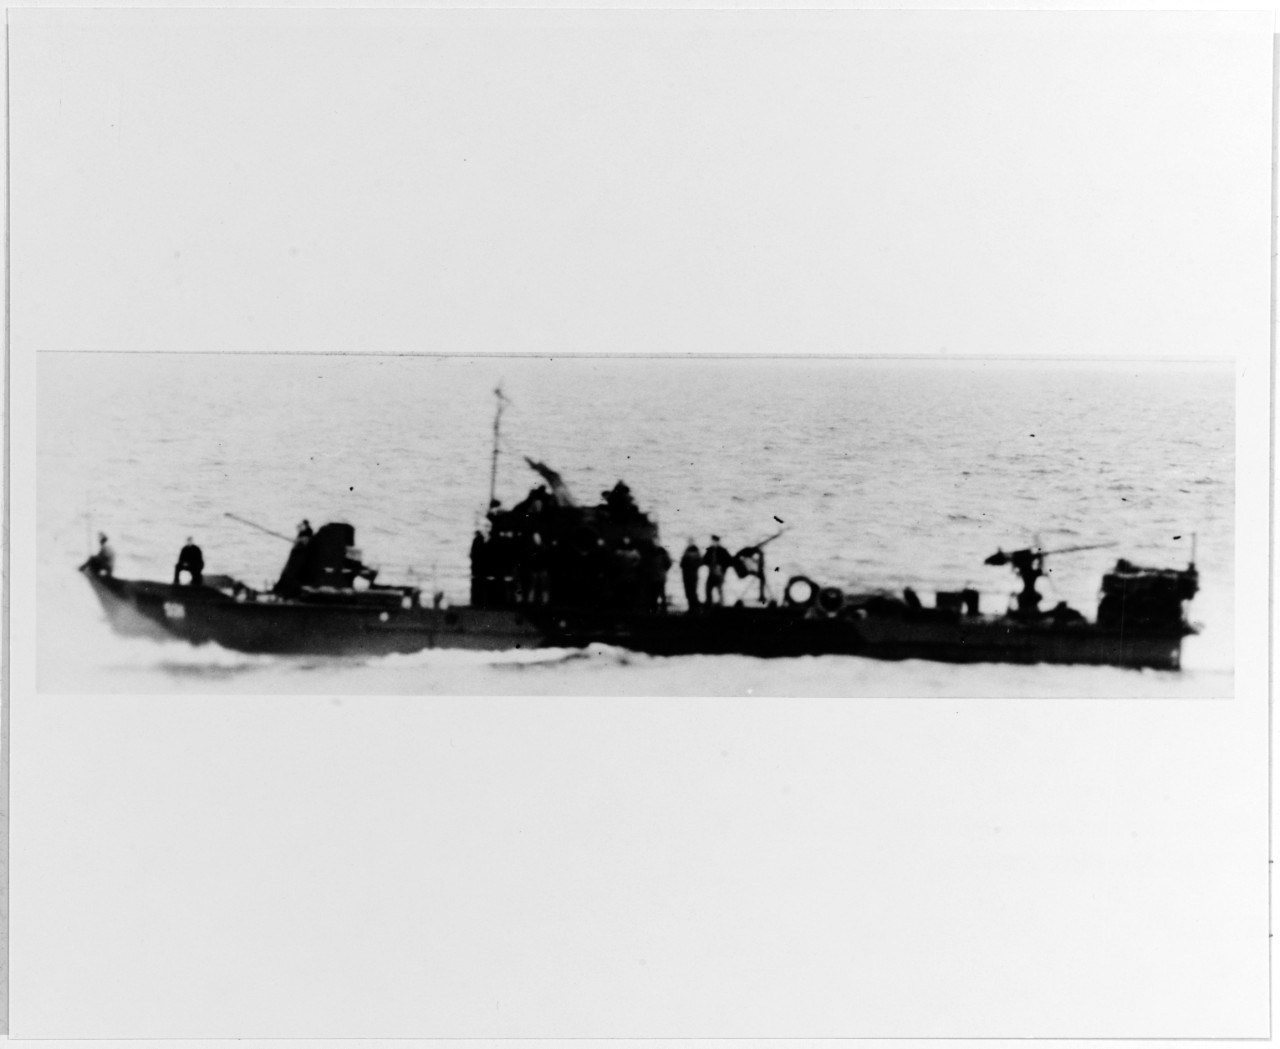 MO-IV Type Patrol Vessel